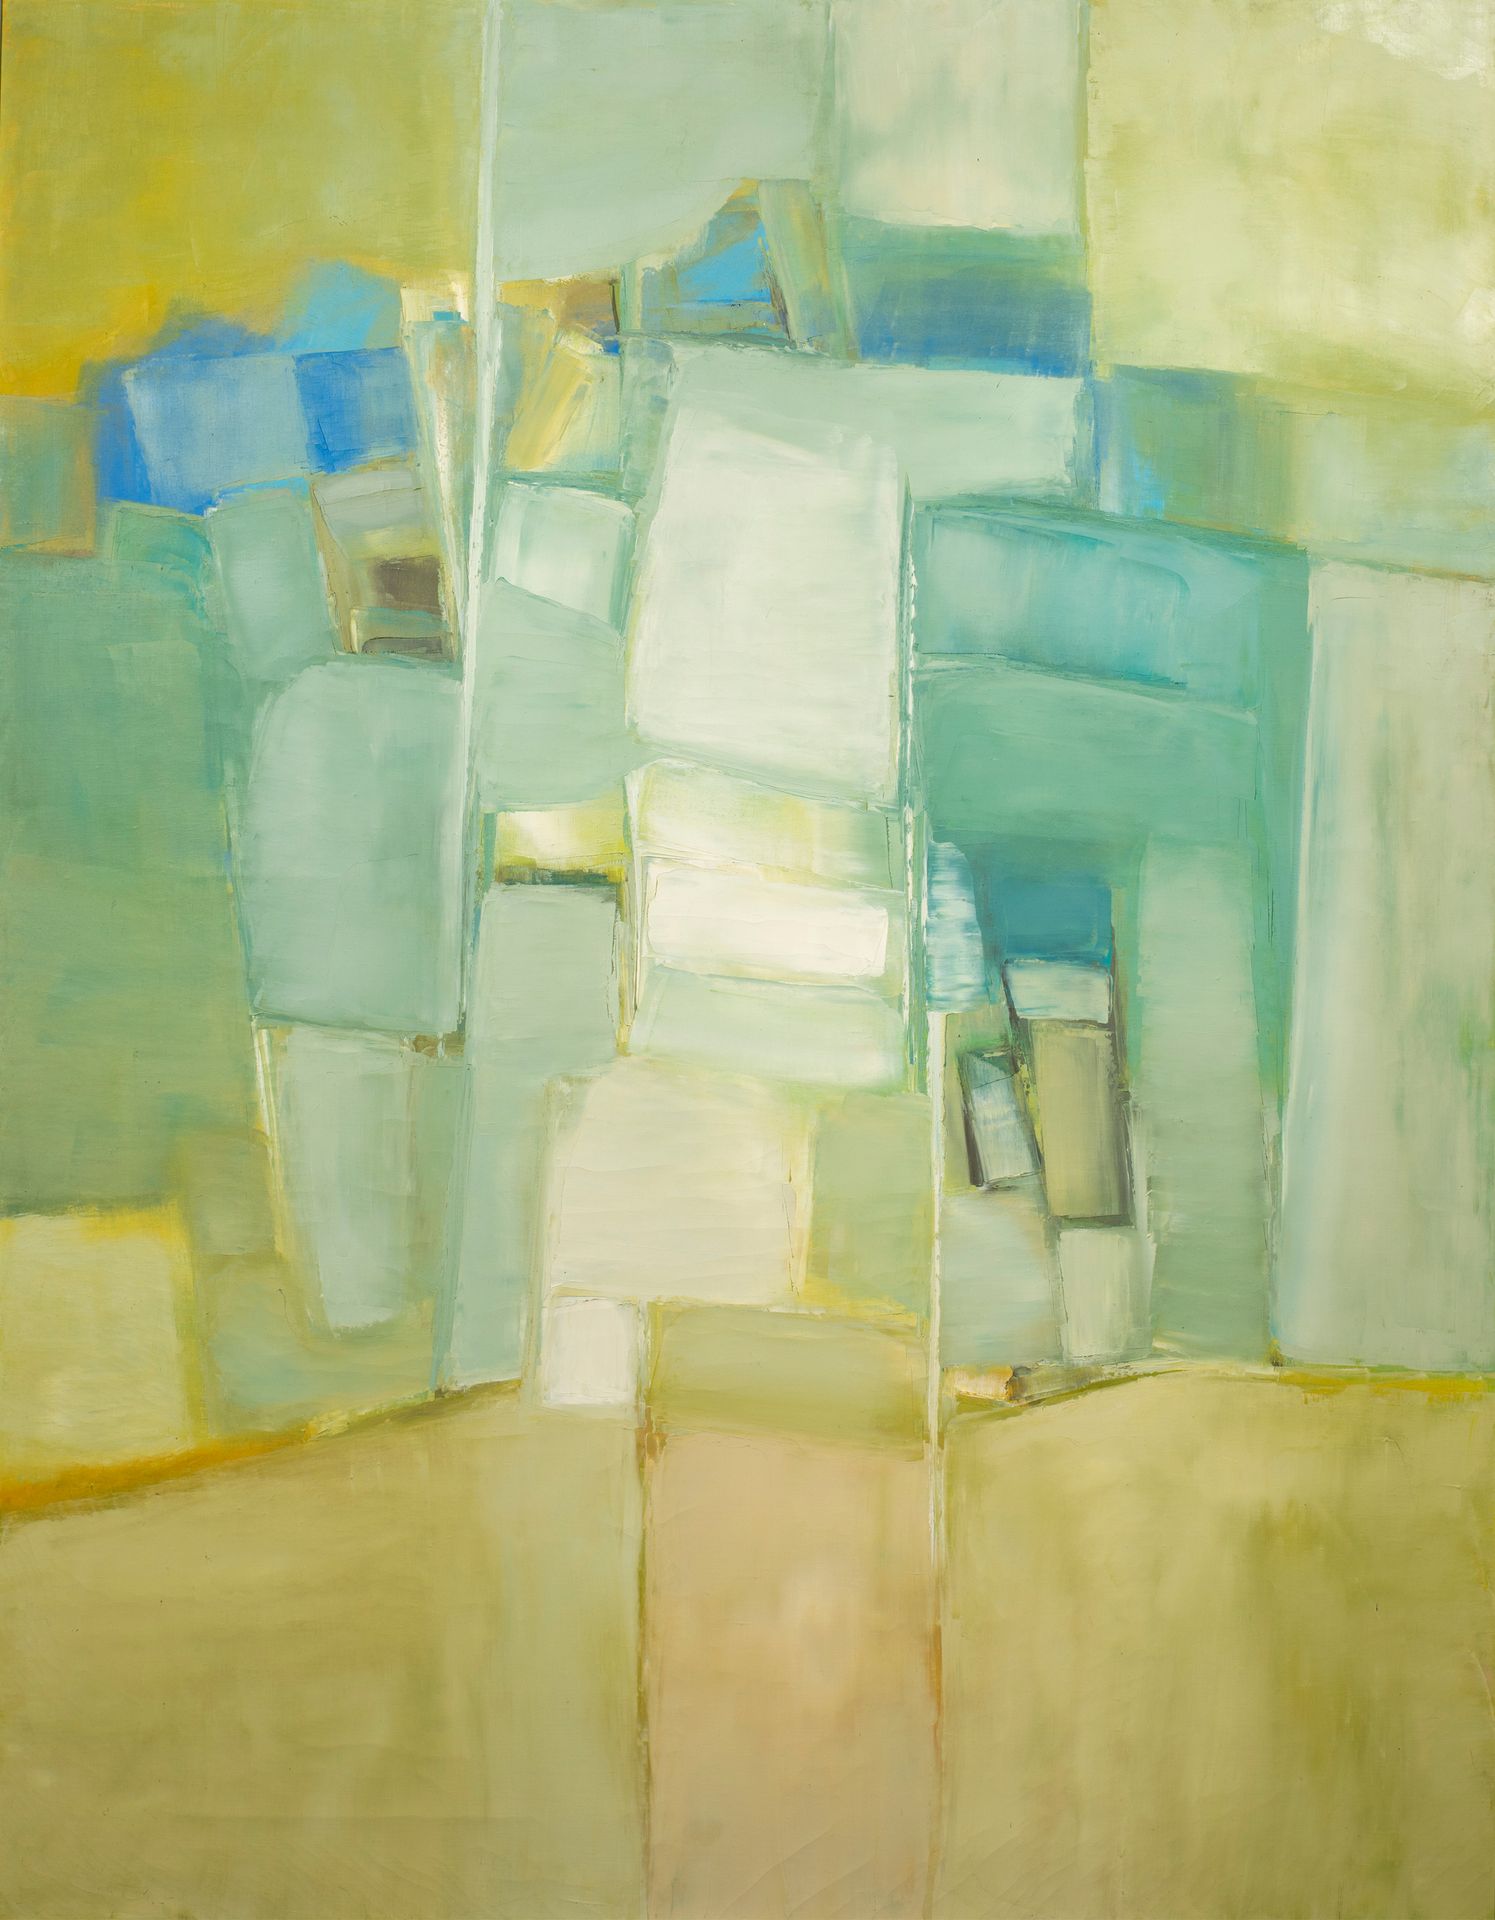 Null 米歇尔-法尔（1928-2009）。

组成，1969年。

布面油画。背面有签名和日期69。

145 x 114厘米。

铝制框架。